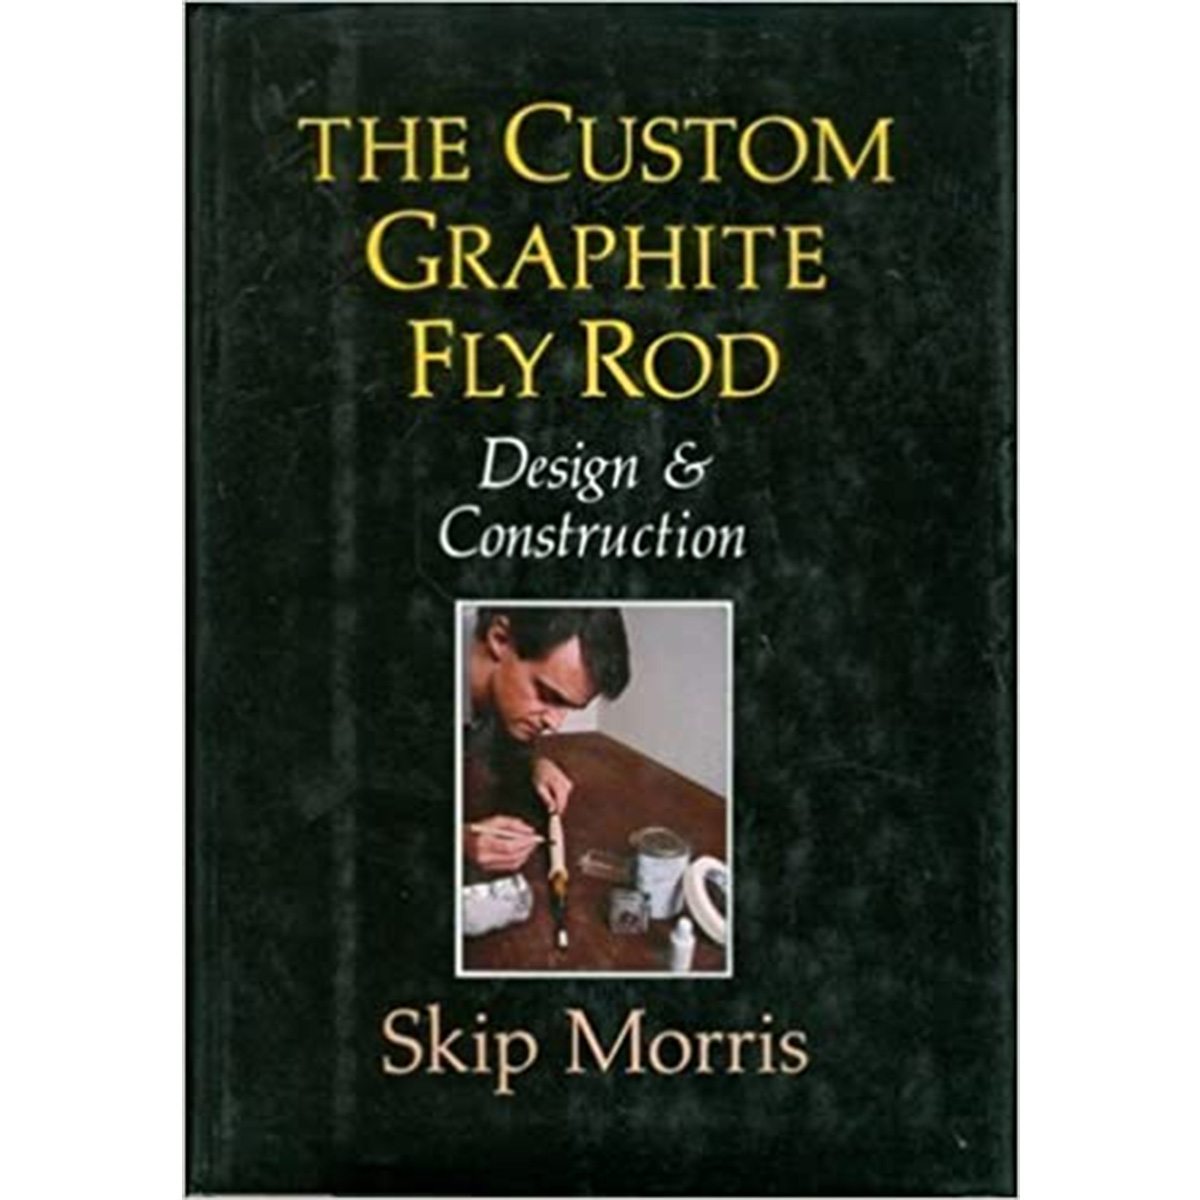 The Custom Graphite Fly Rod